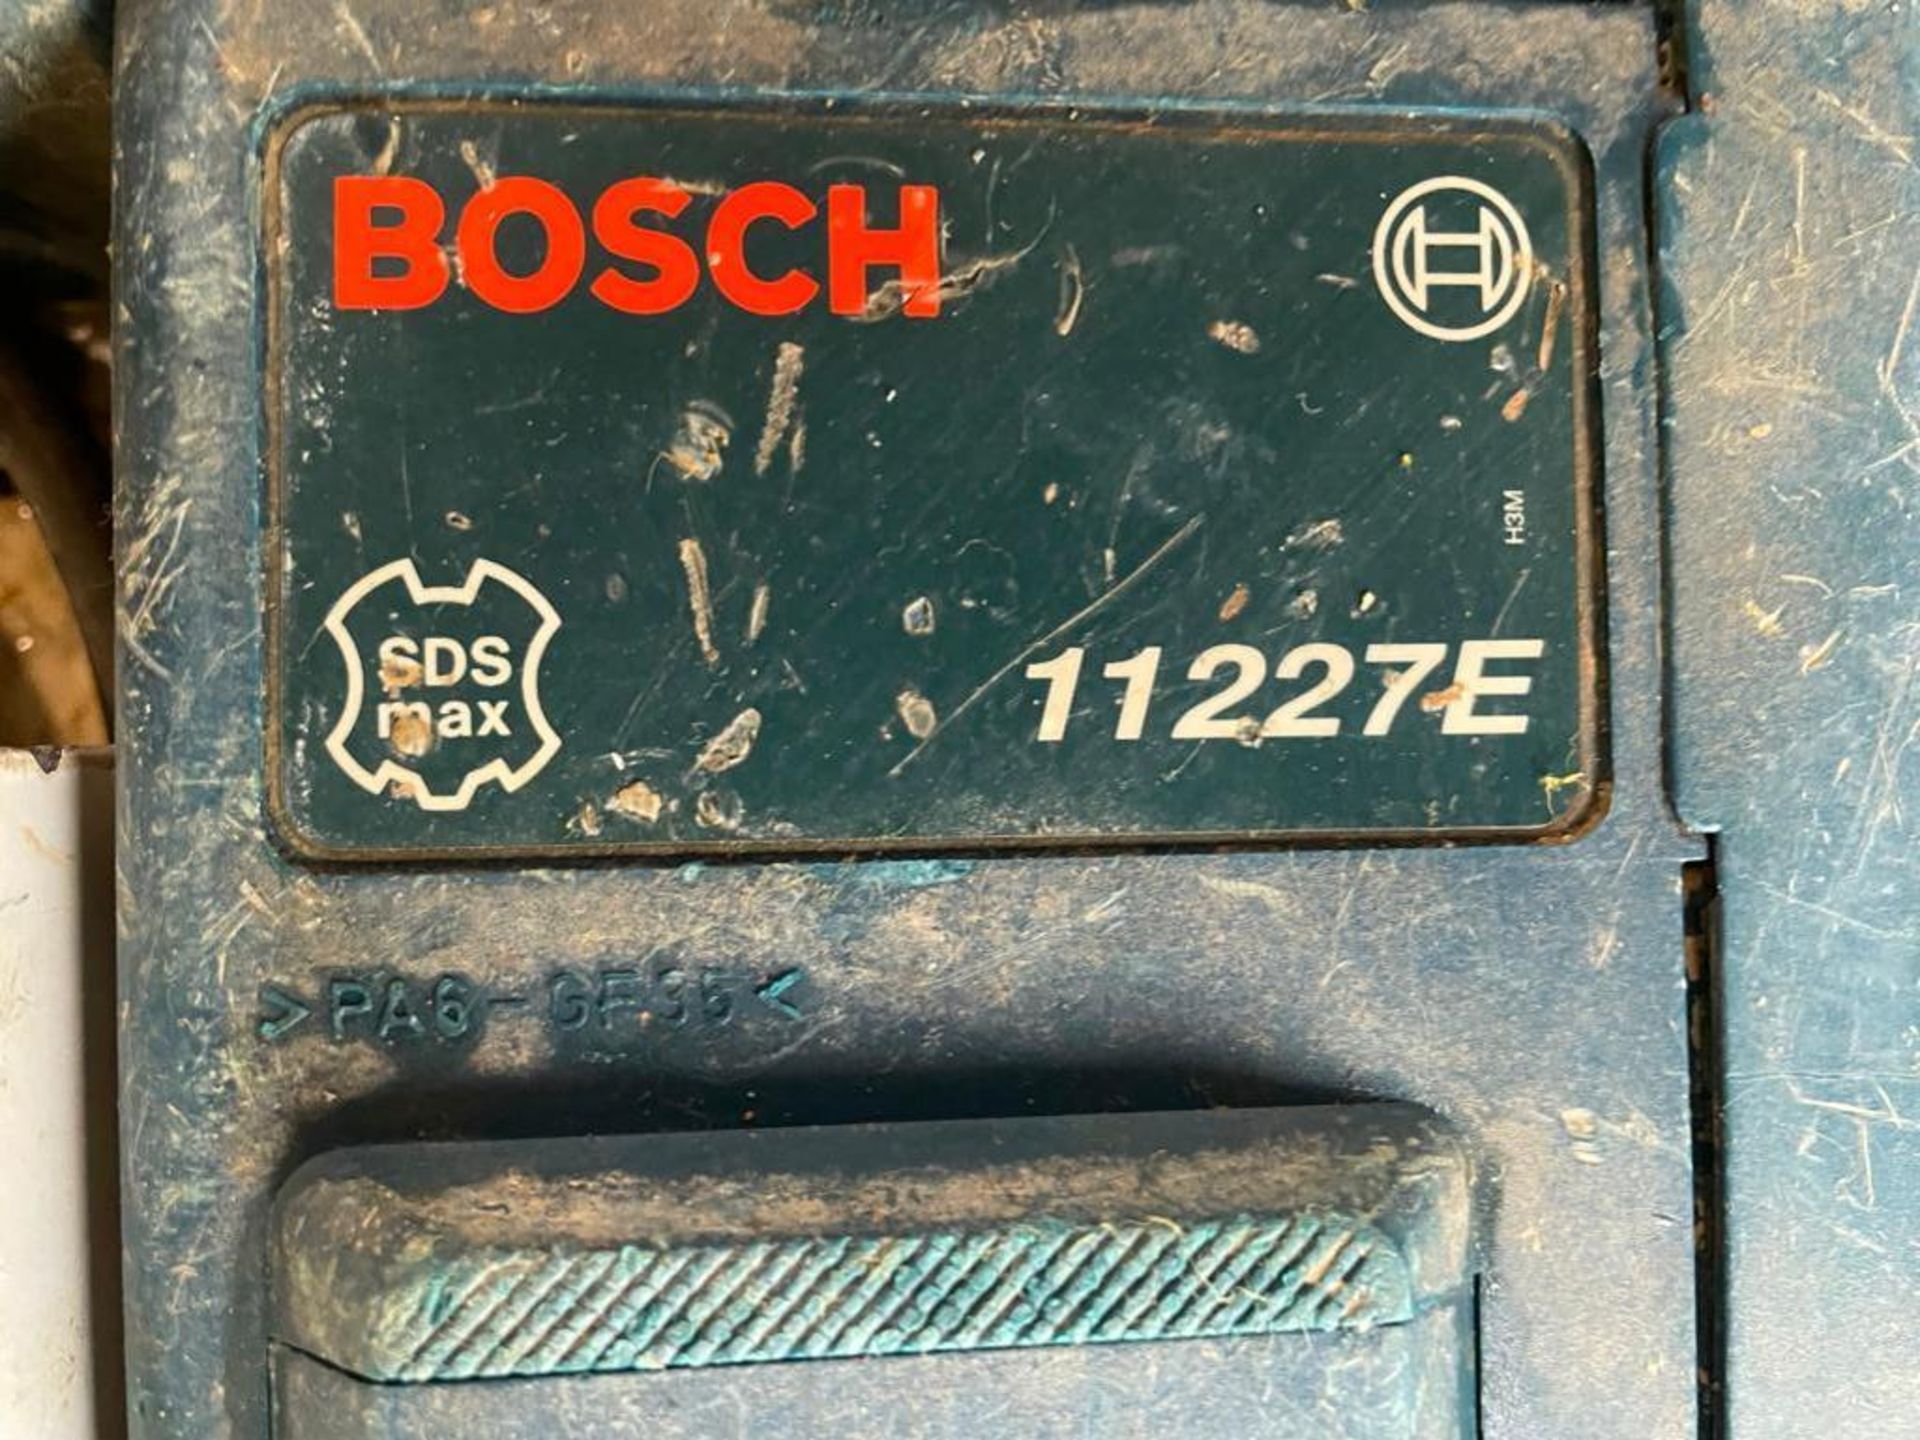 Bosch 11227E Rotary Hammer Drill, 120V. Located in Hazelwood, MO - Image 3 of 4